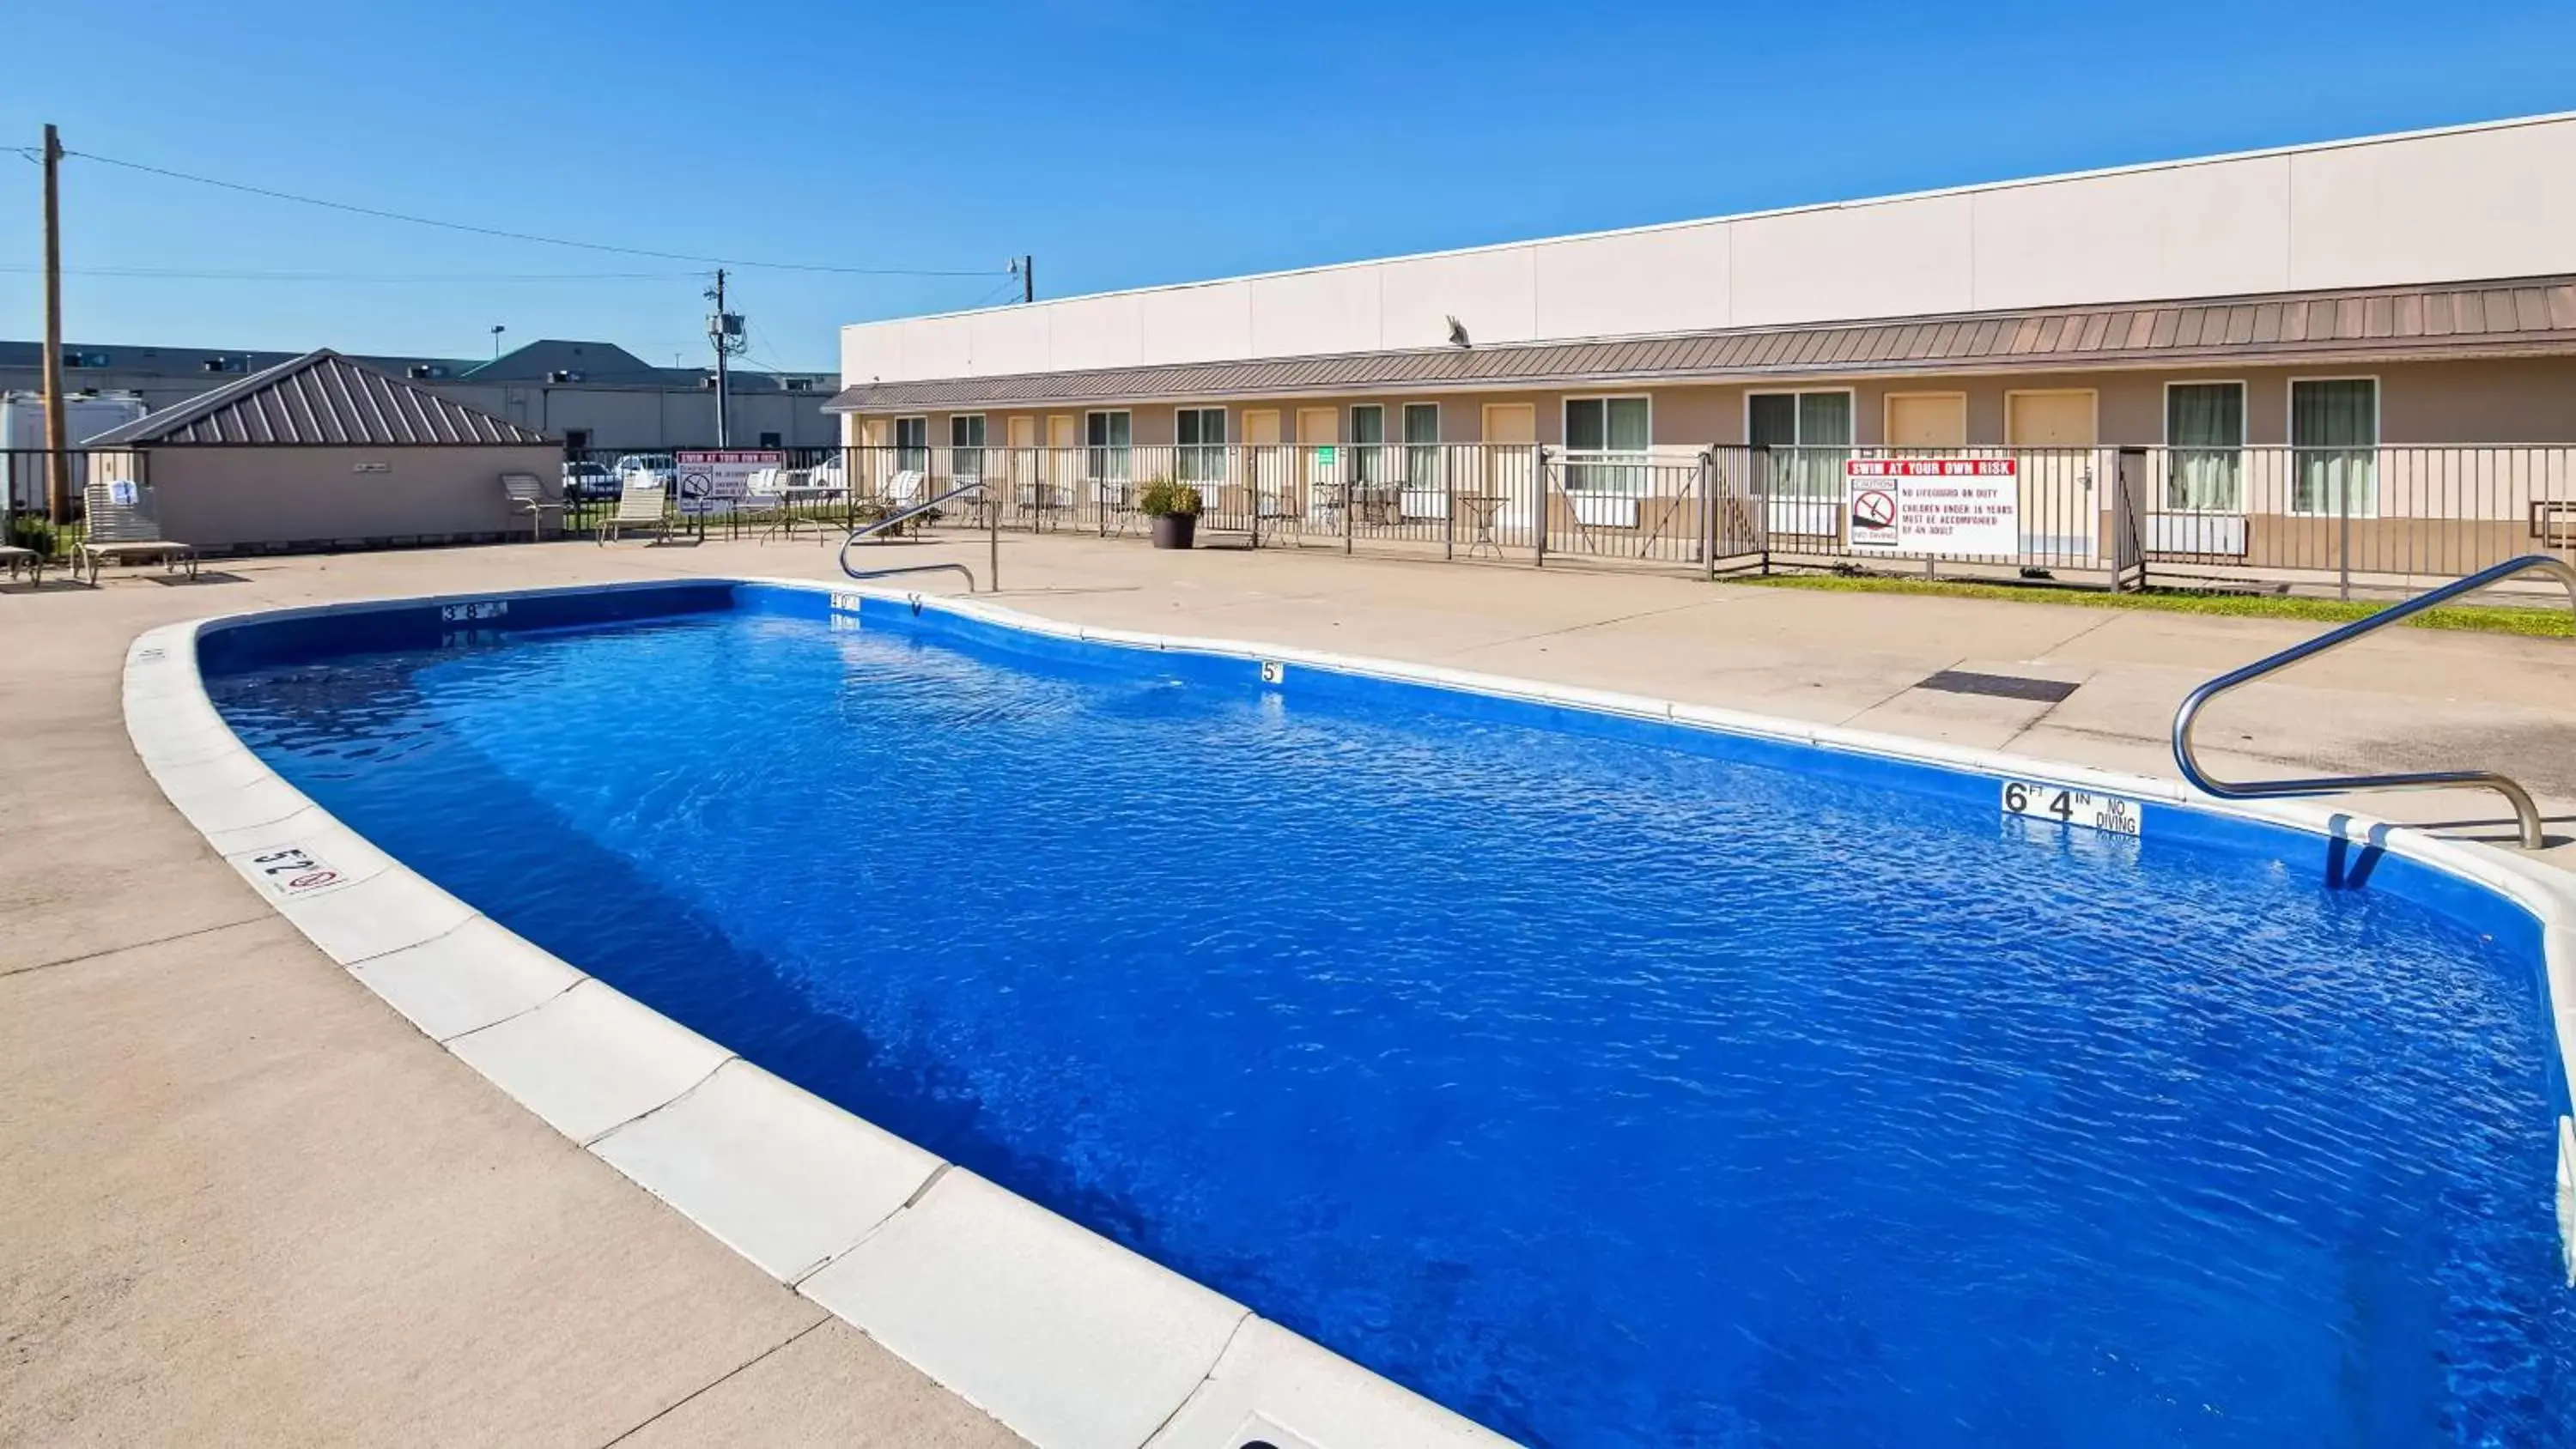 On site, Swimming Pool in Best Western Williamsport Inn